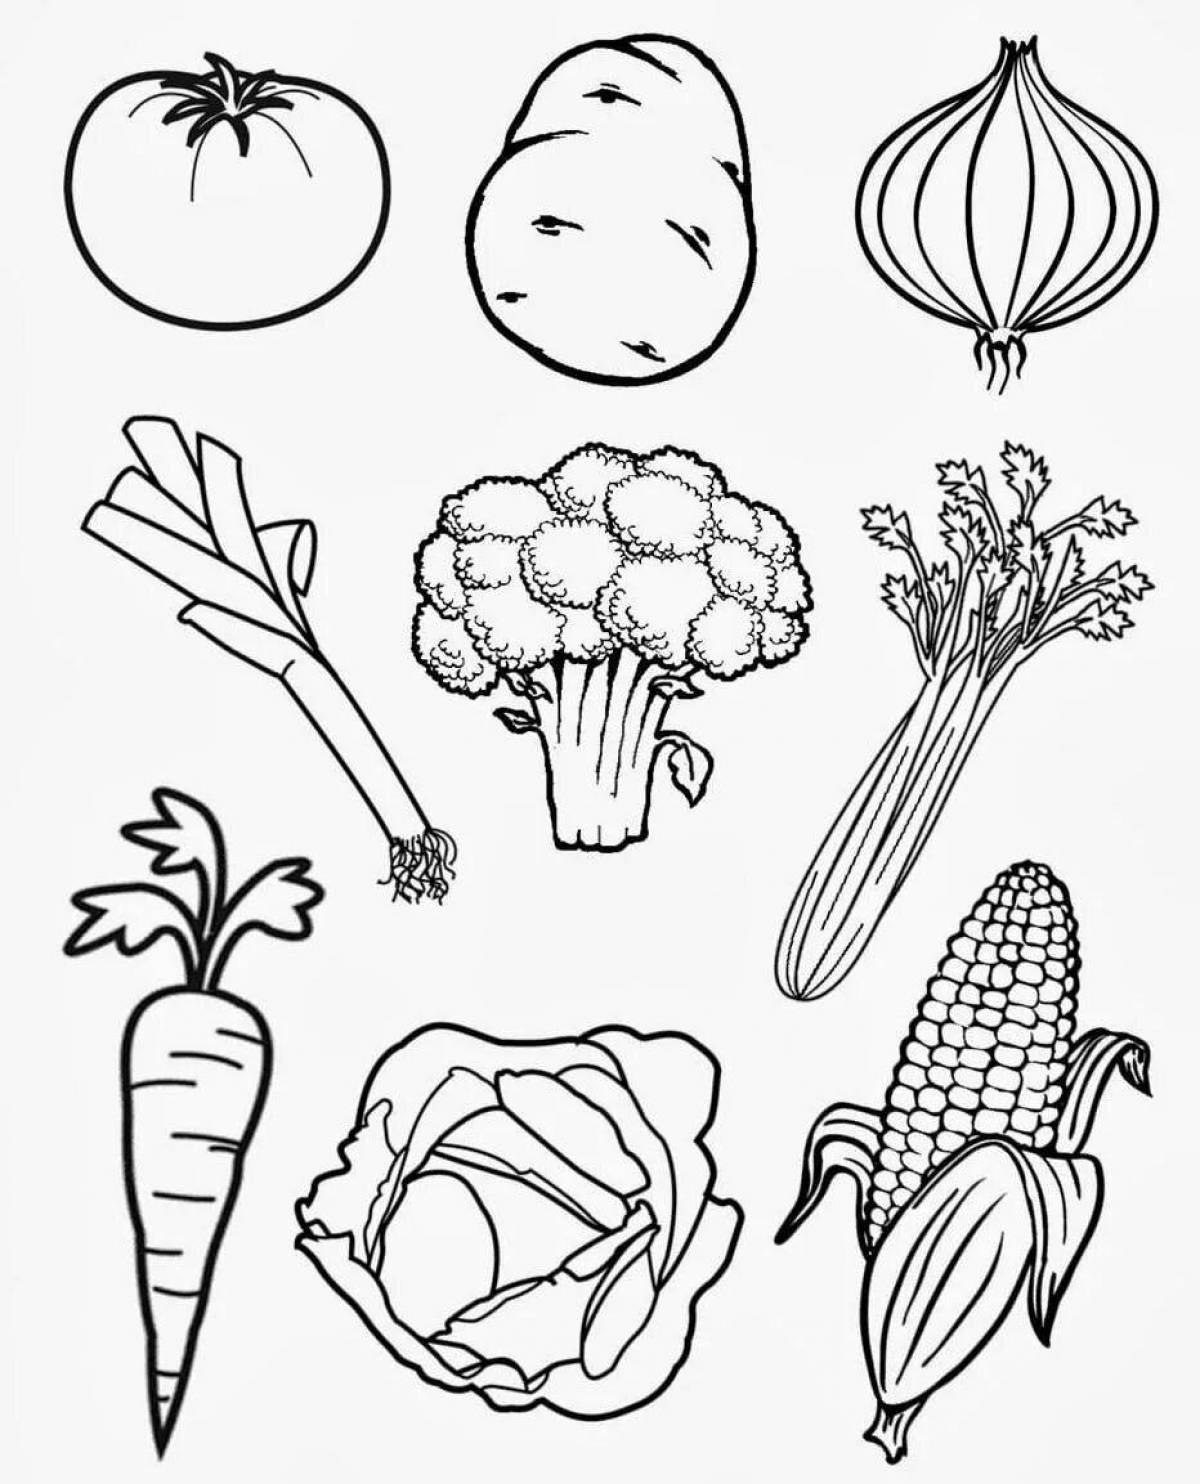 Fun vegetable coloring book for preschoolers